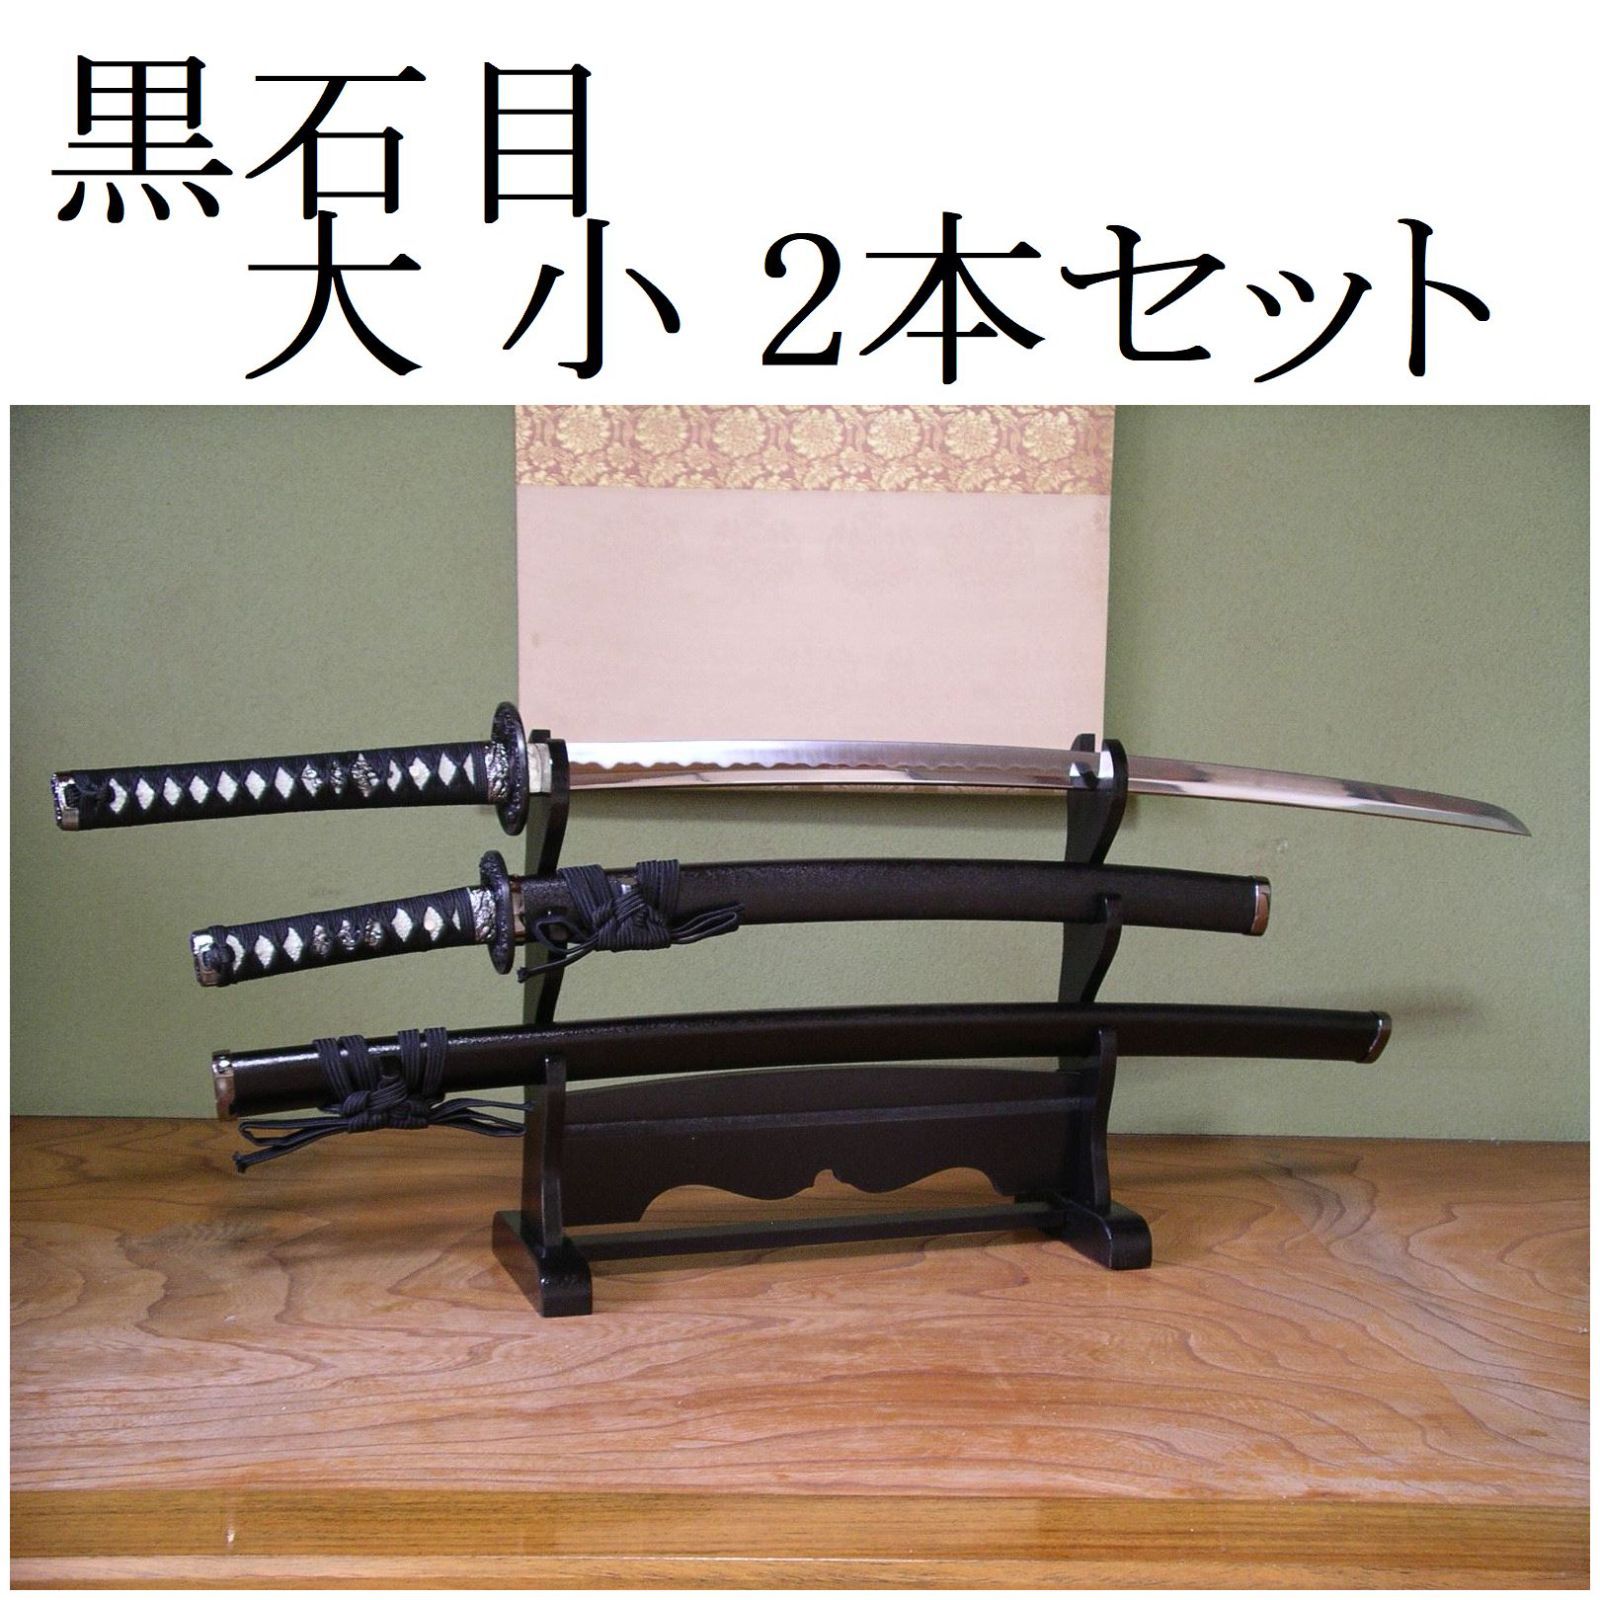 超熱 模擬刀 大小セット 日本刀 模造刀 武具 - findbug.io